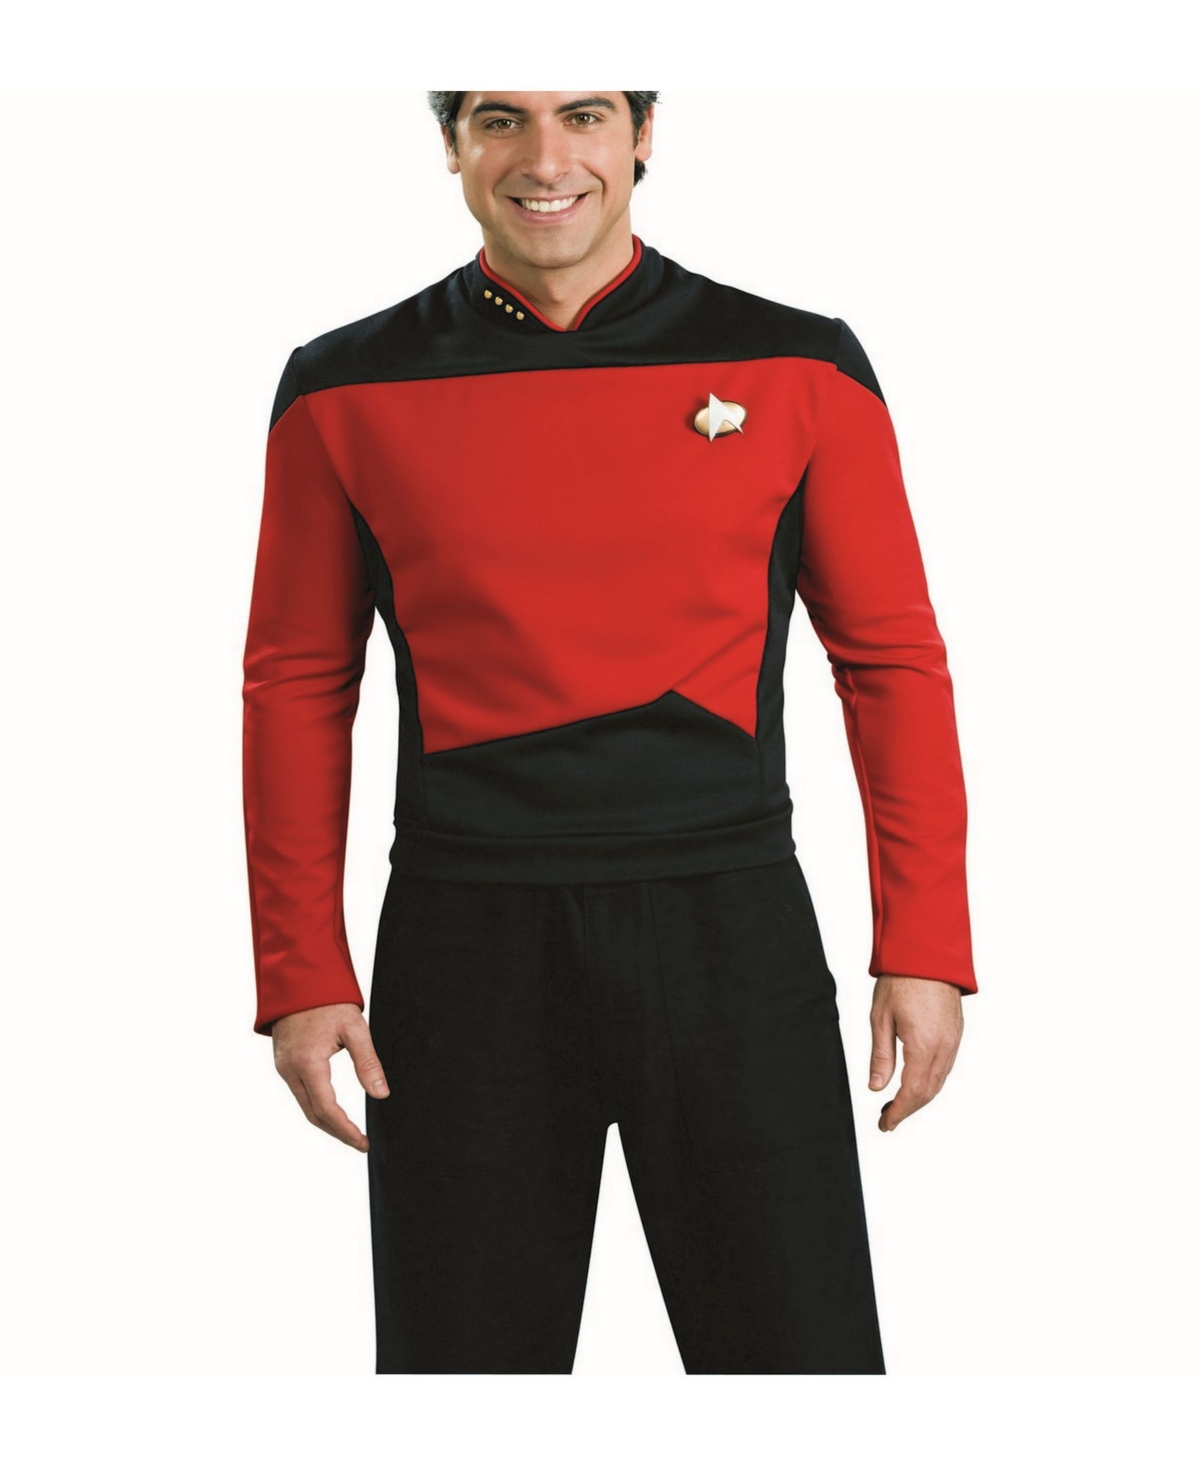 BuySeason Men's Star Trek Deluxe Shirt Costume - Red